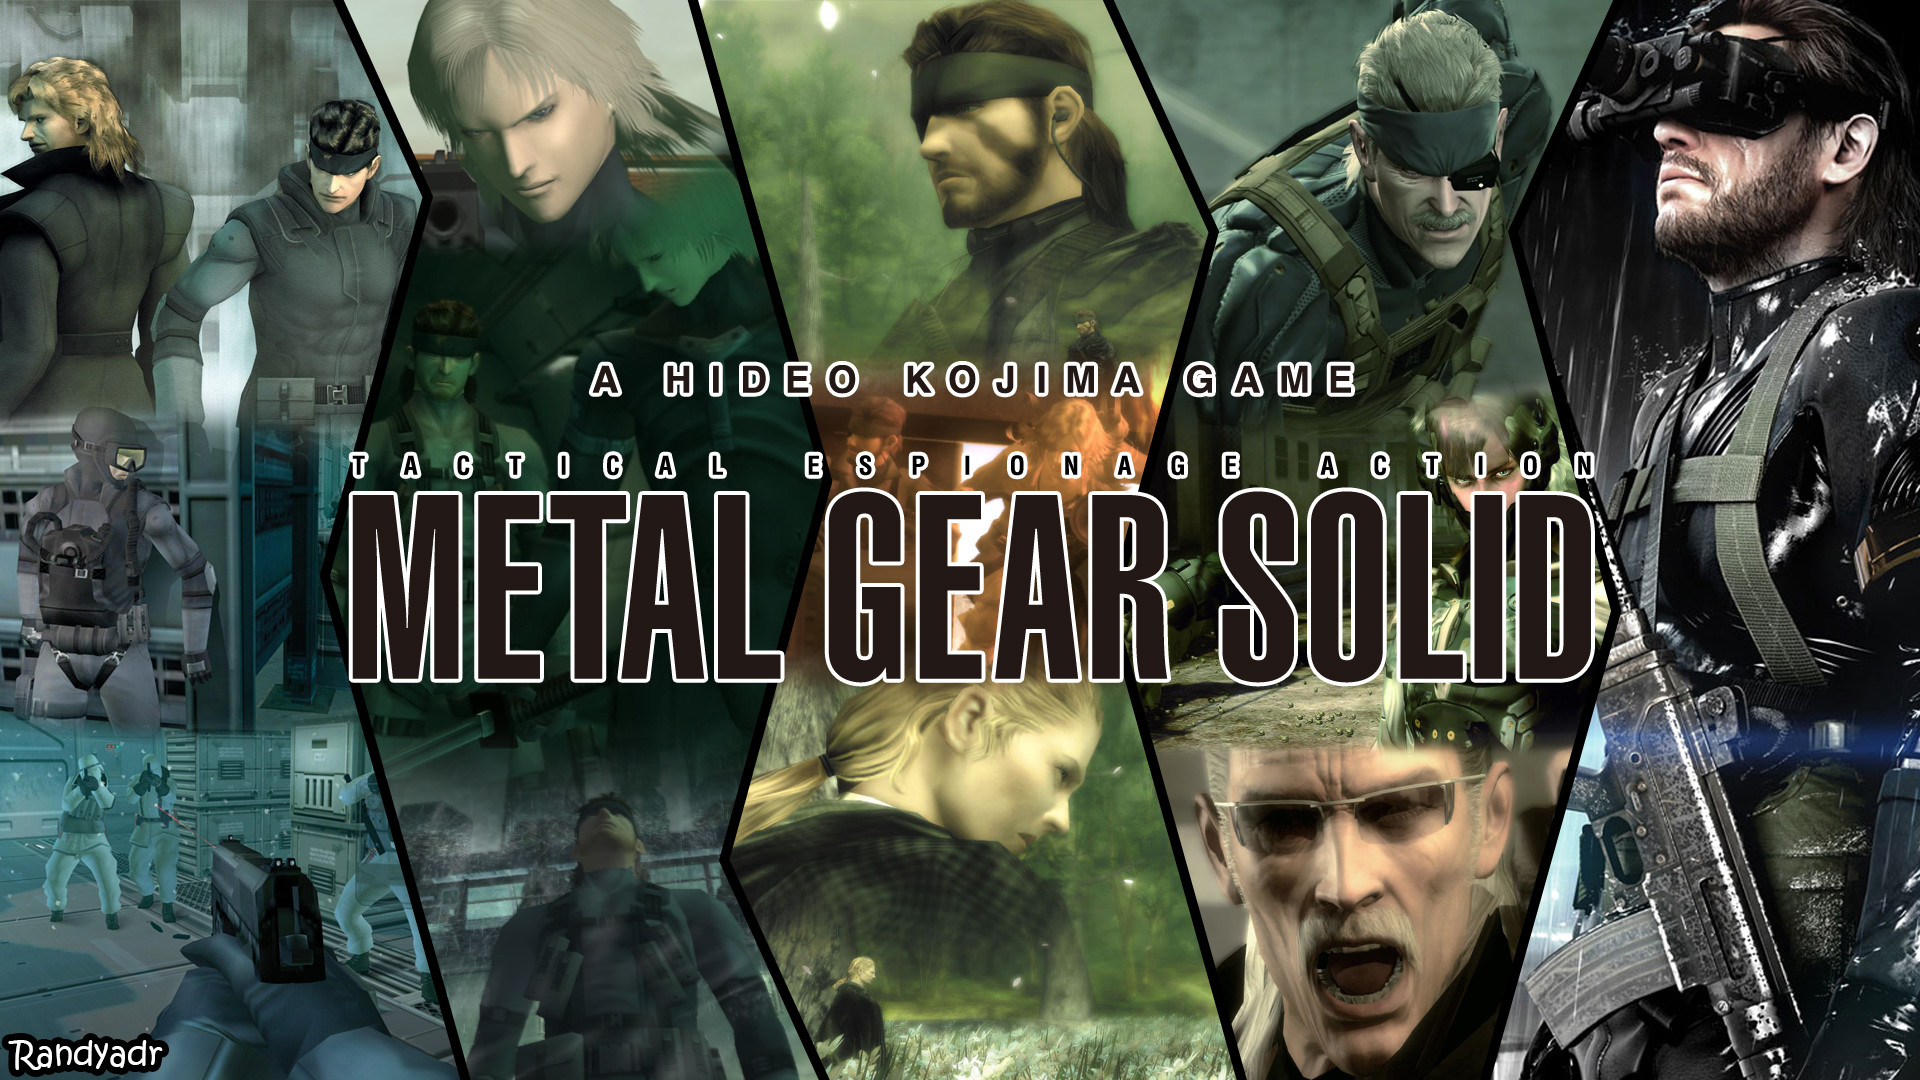 … Metal Gear Solid Wallpaper Attempt by randyadr